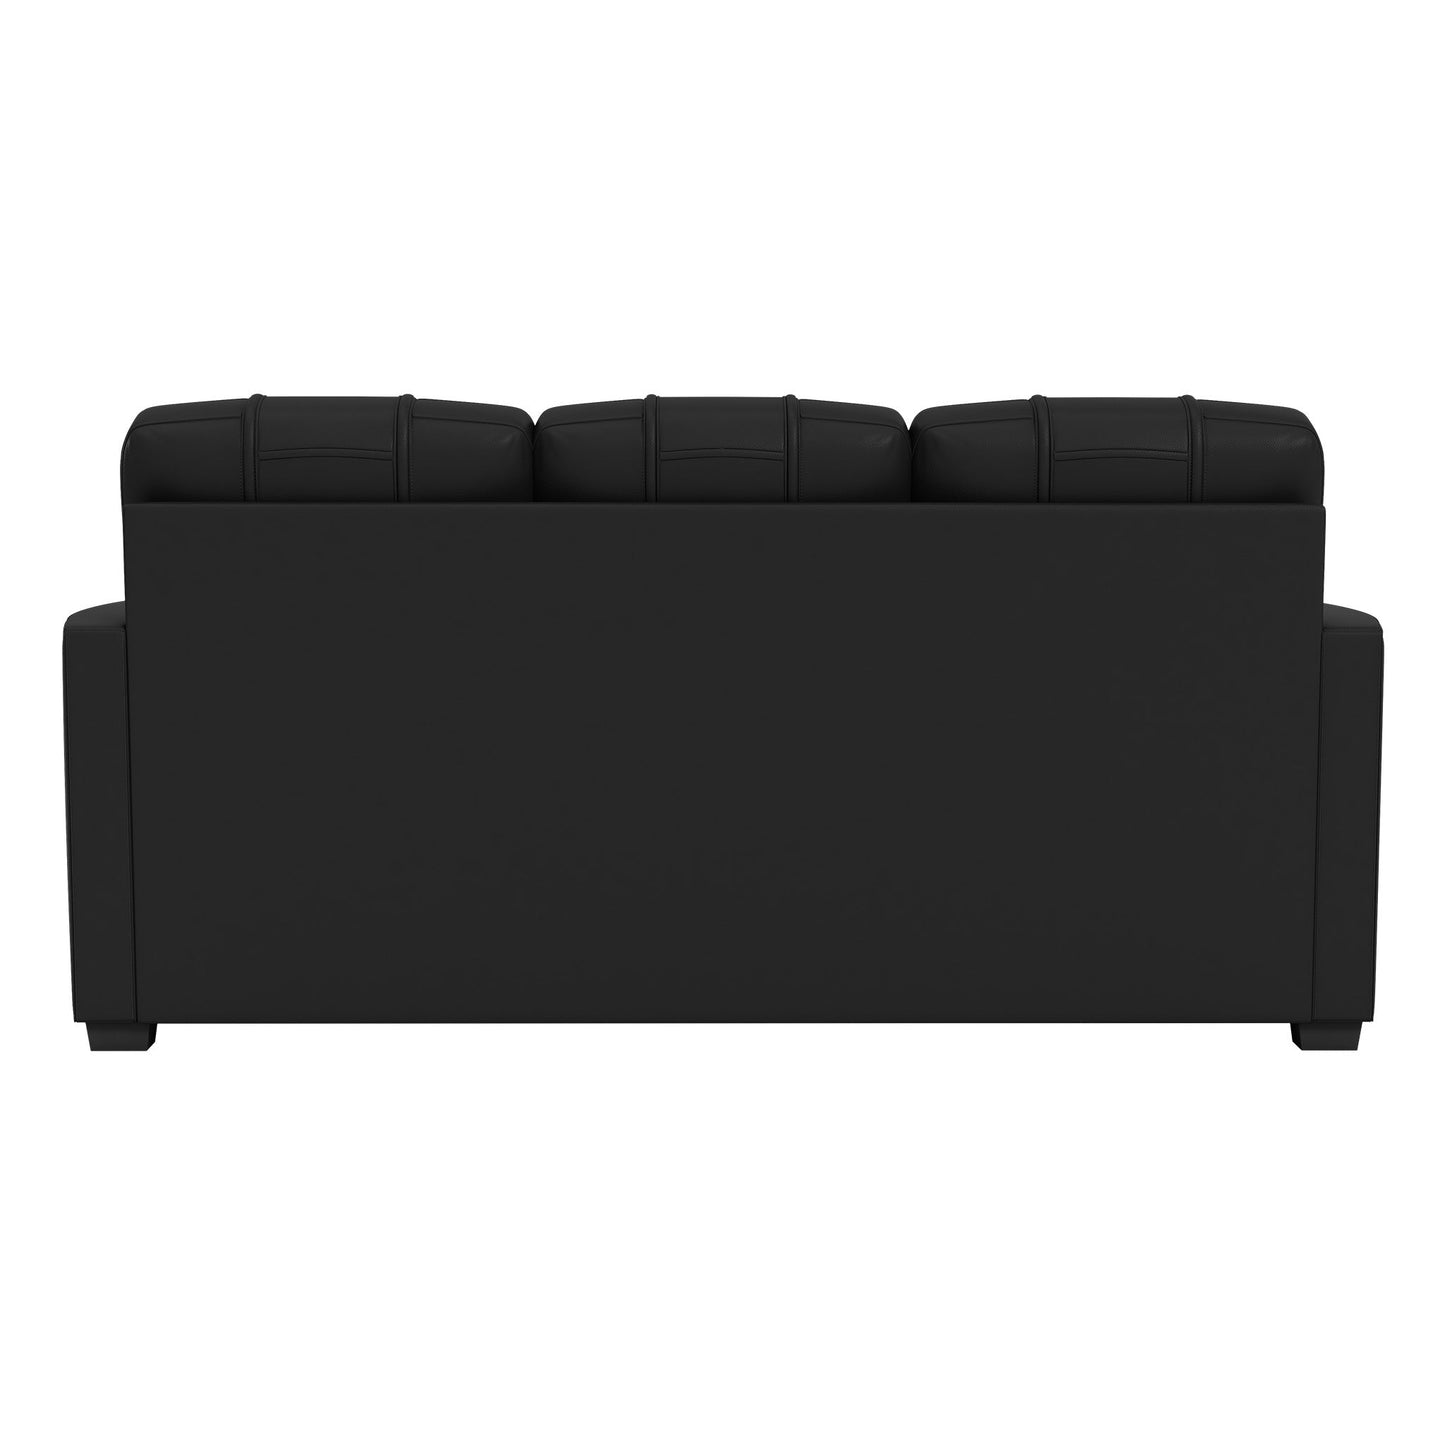 Silver Sofa with Chevy Trucks Logo